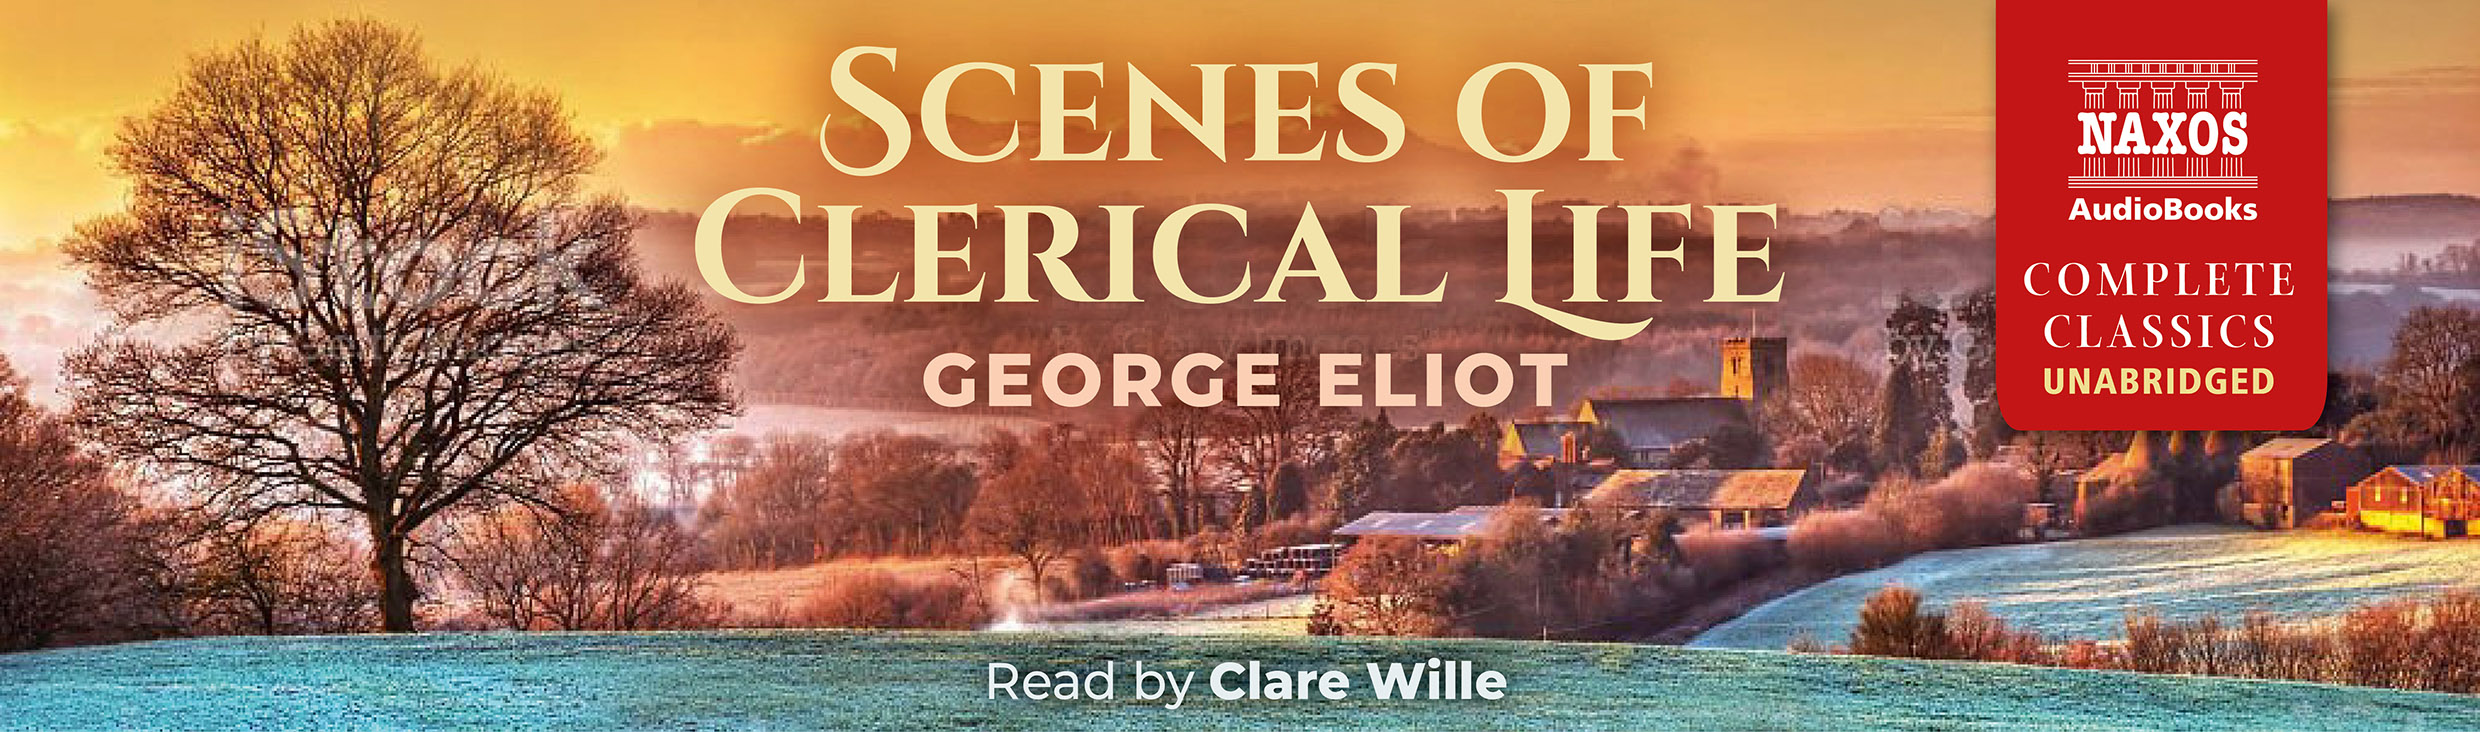 Scenes of Clerical Life (unabridged)